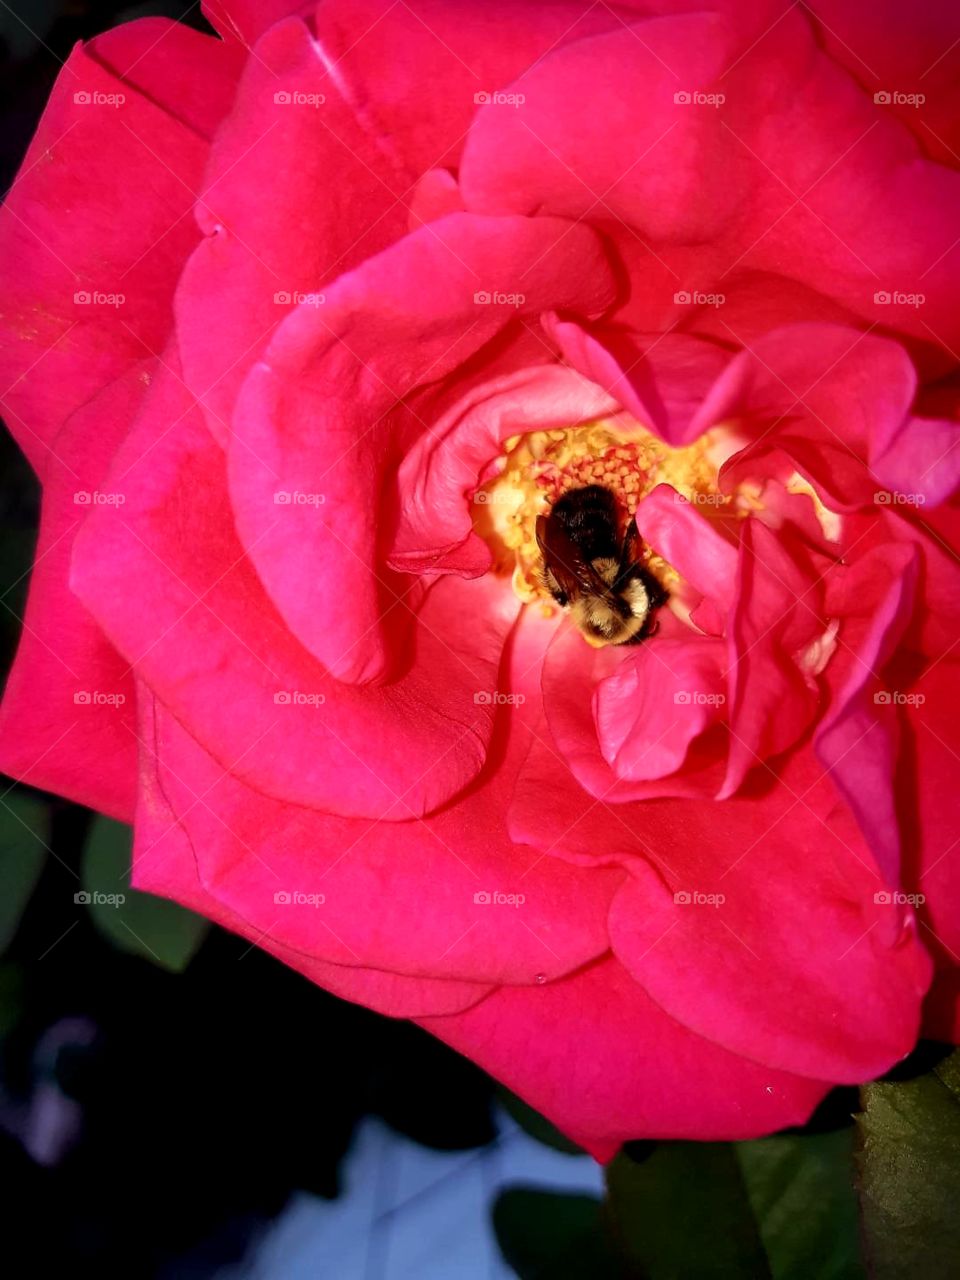 Honey Bee in rose